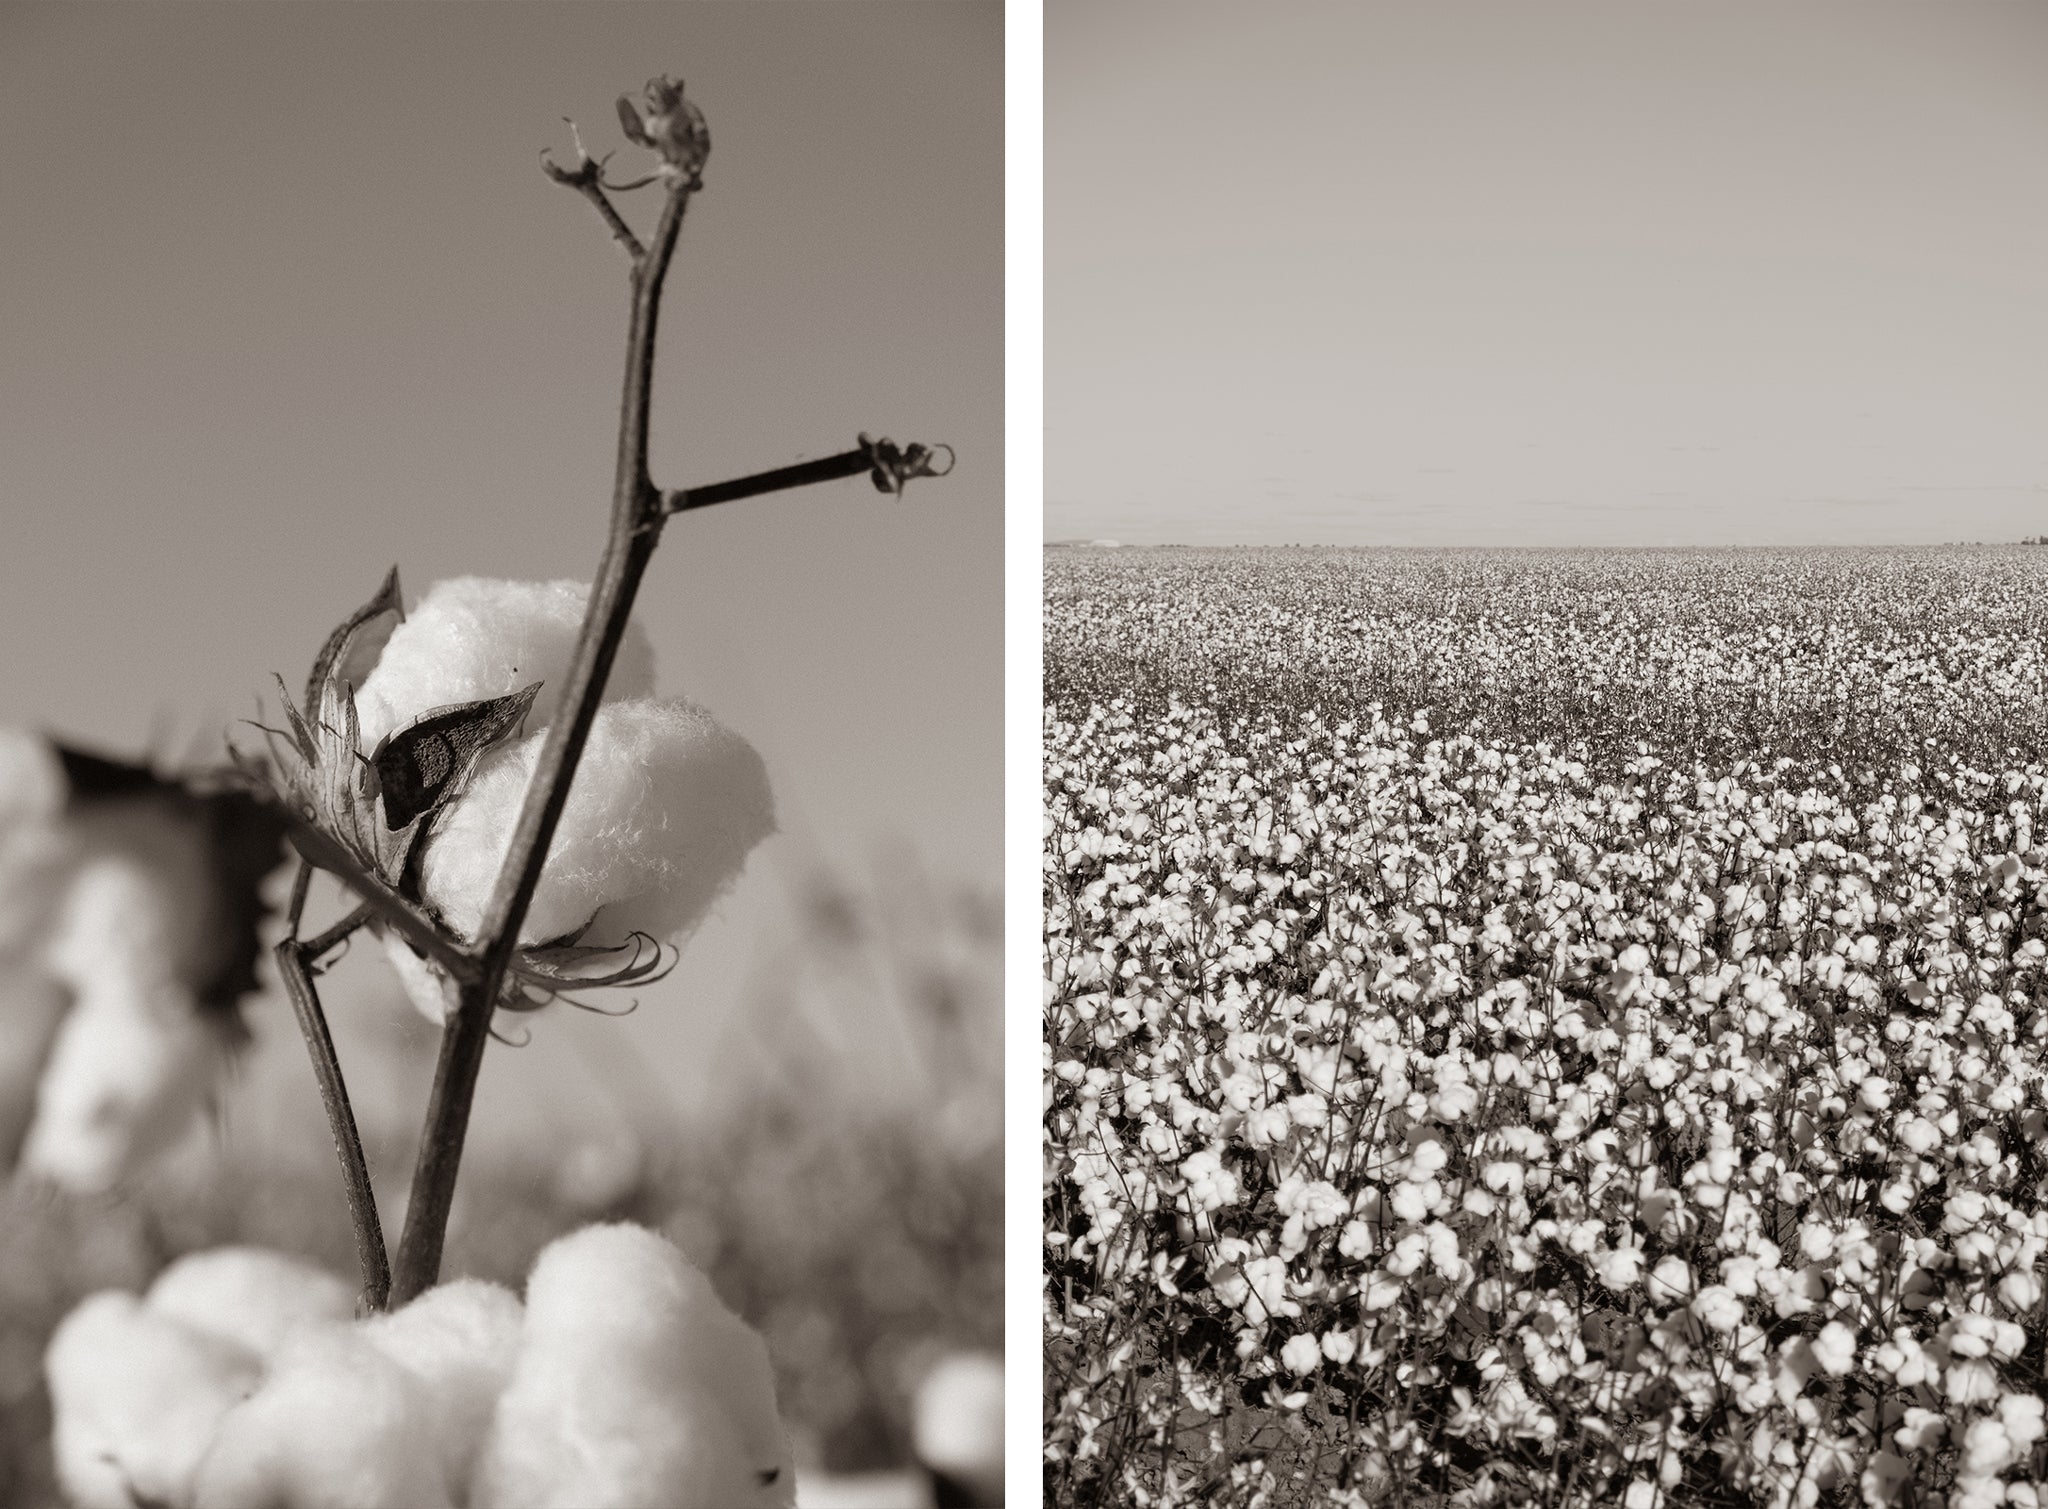 A.BCH Cotton Trip - Image of the Australian Cotton Fields